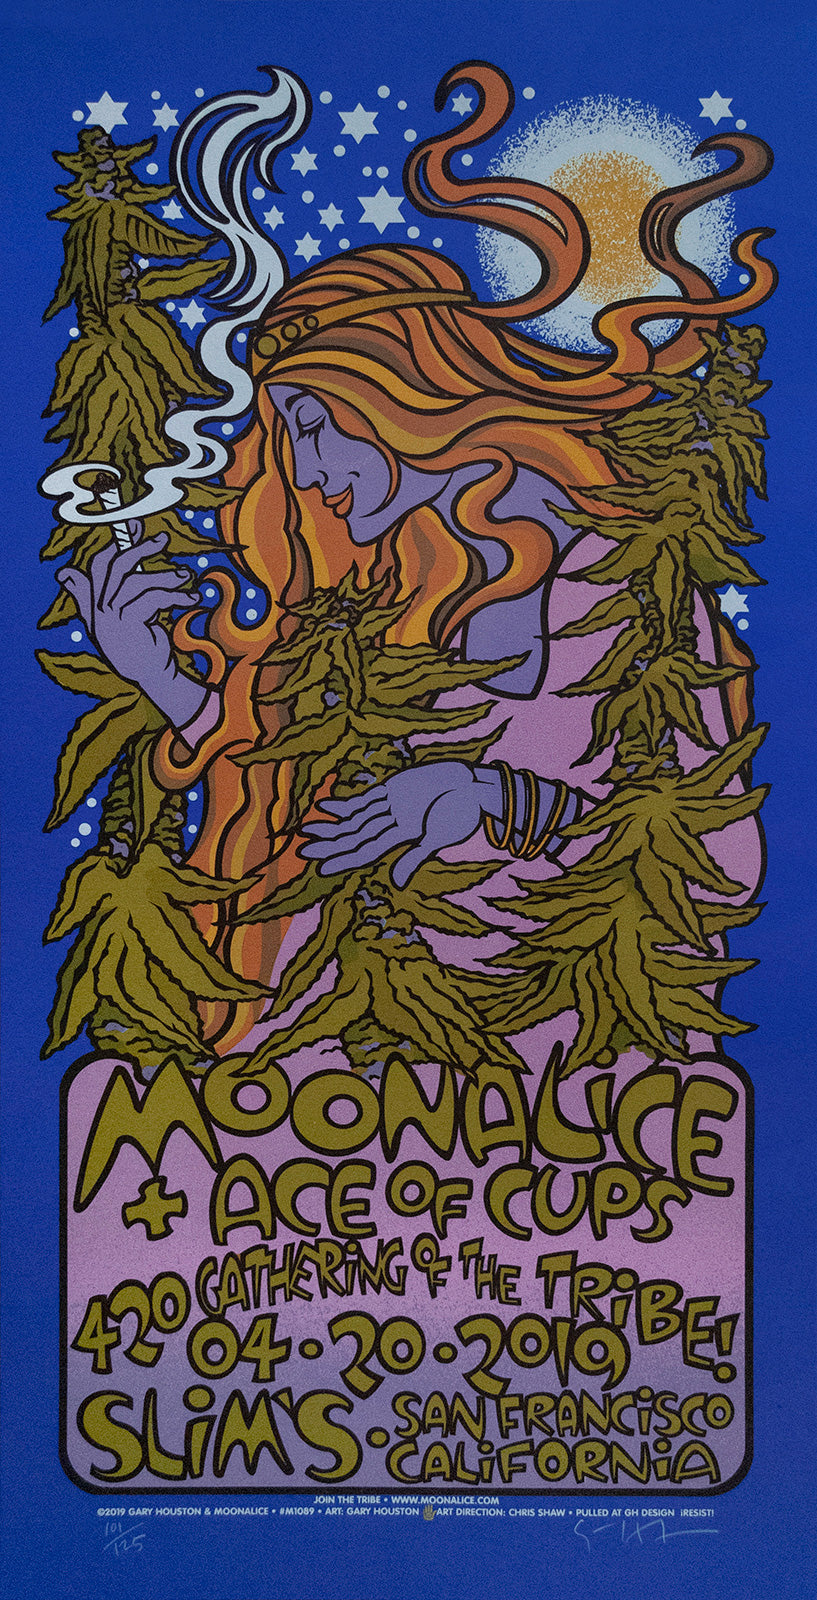 Moonalice #8 • 420 Gathering